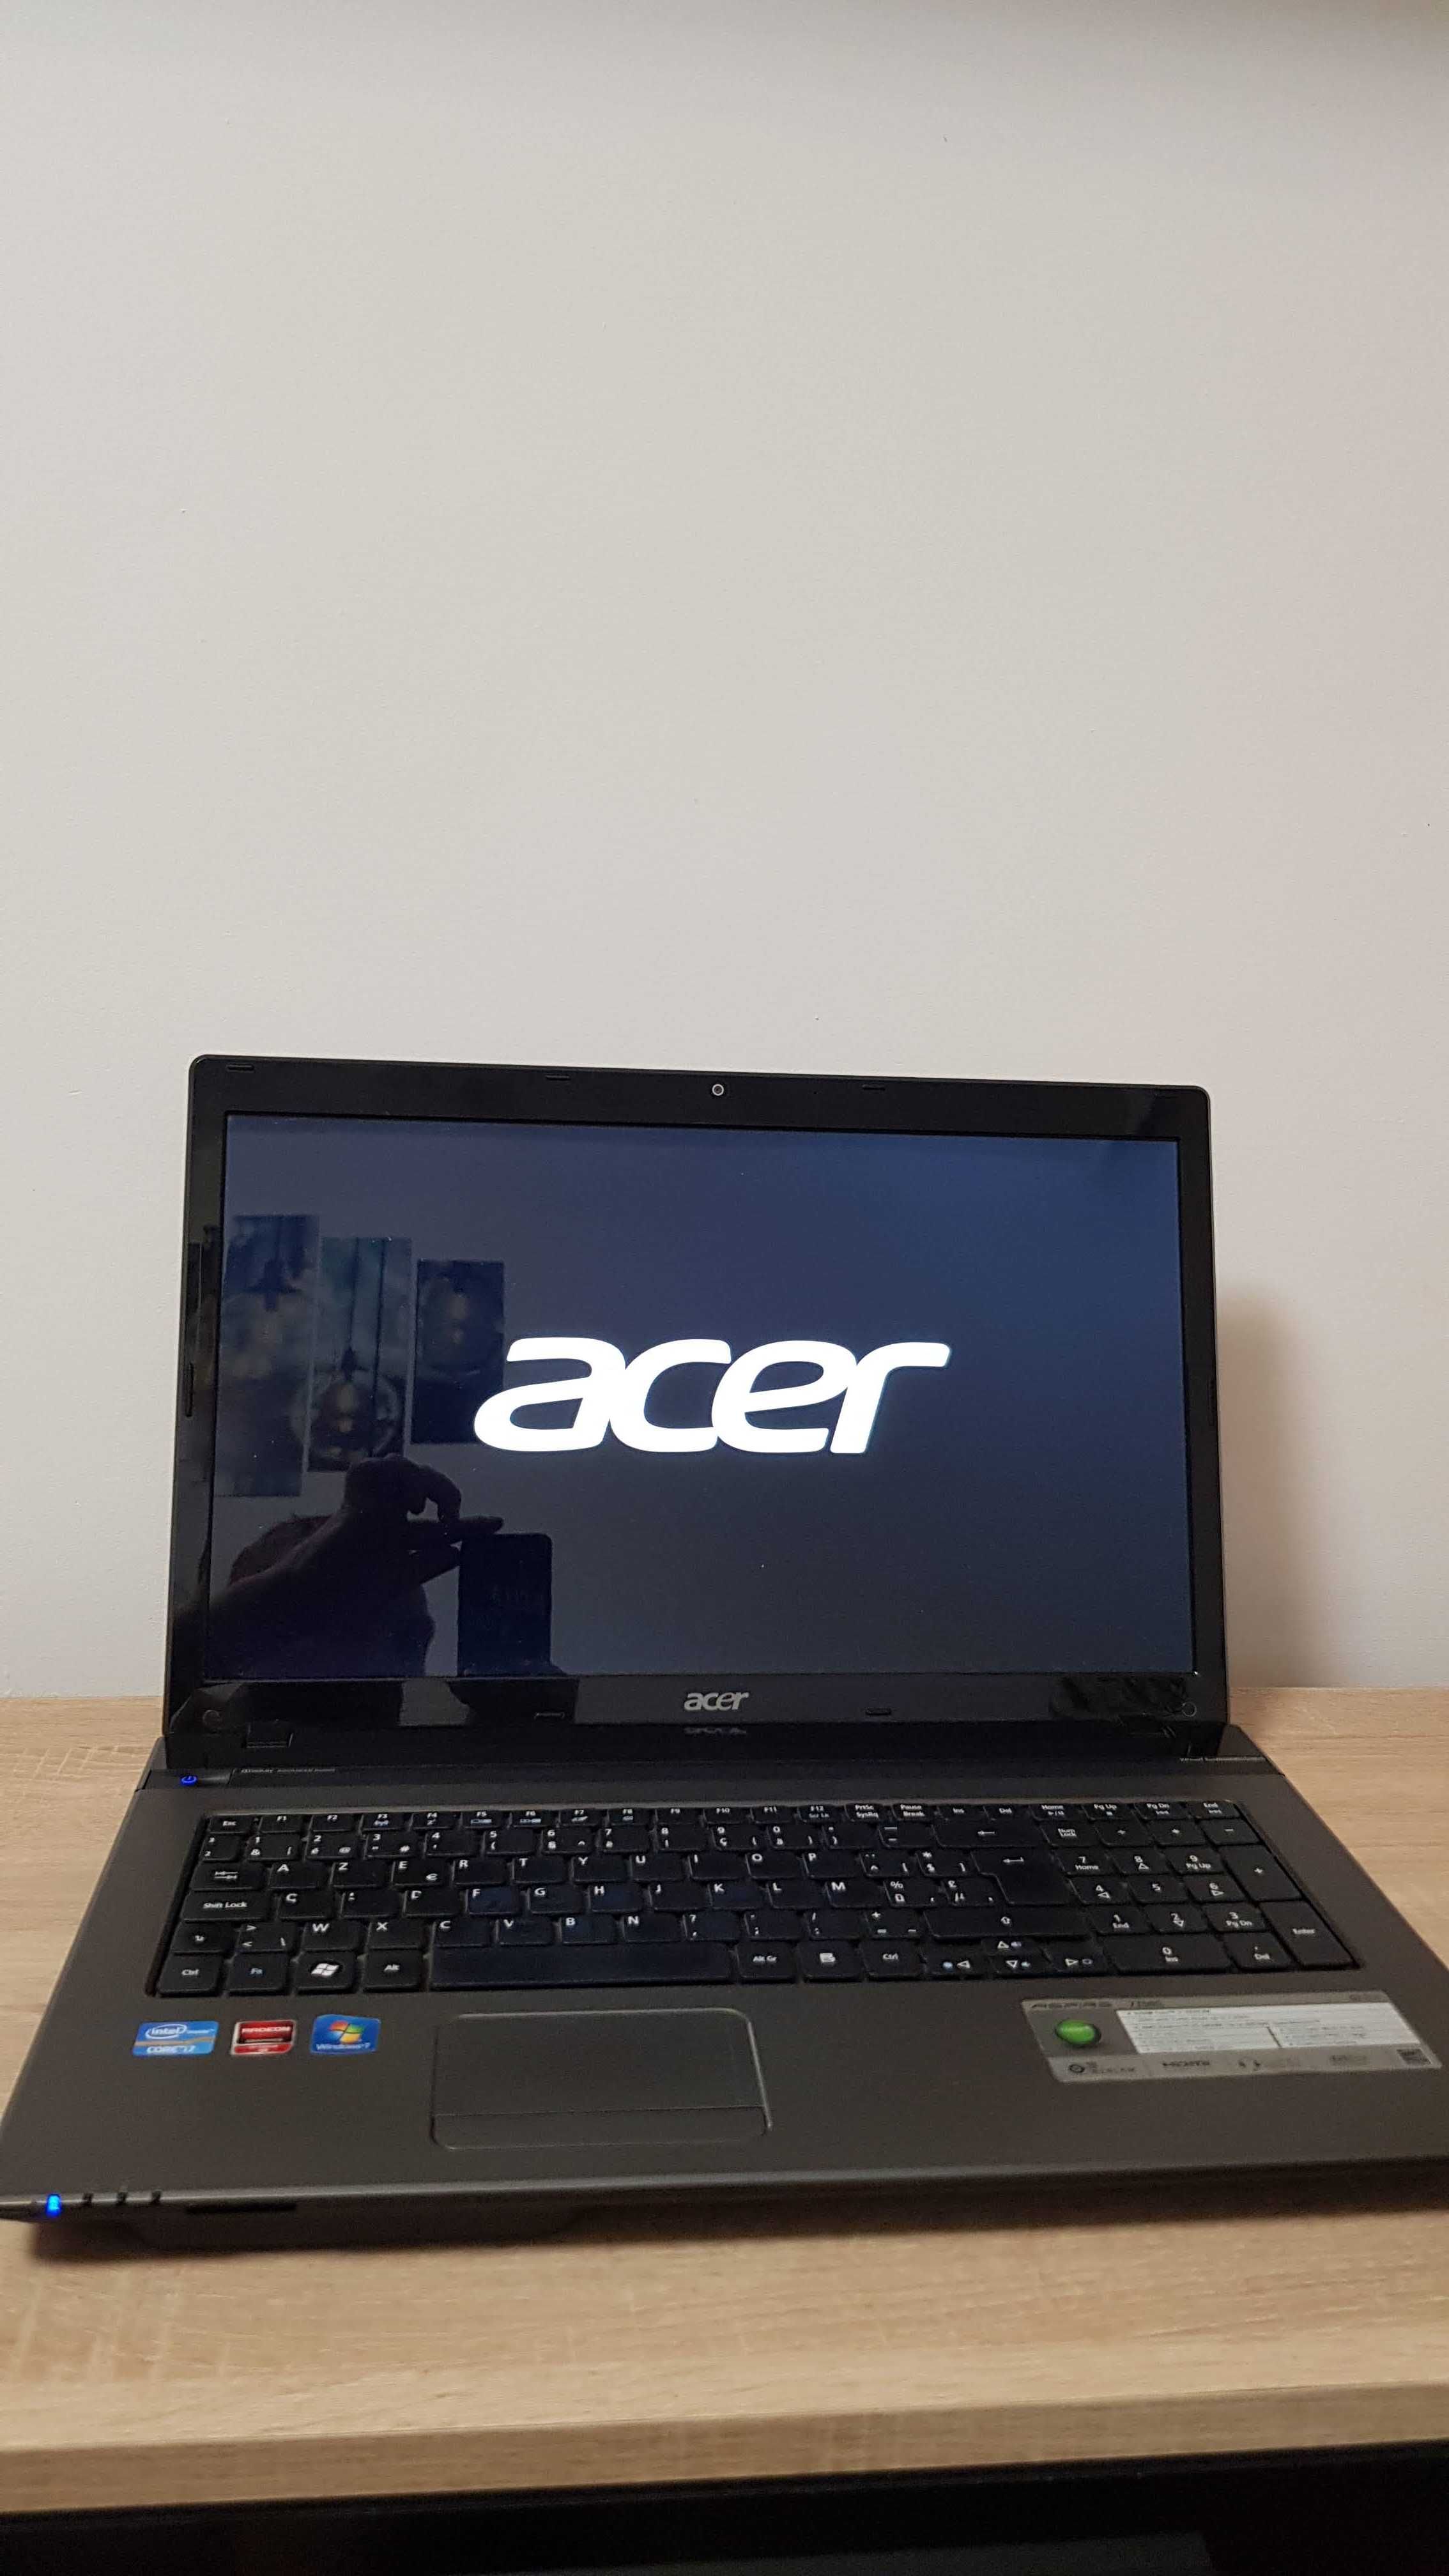 Acer Aspire 7750G Intel Core i7